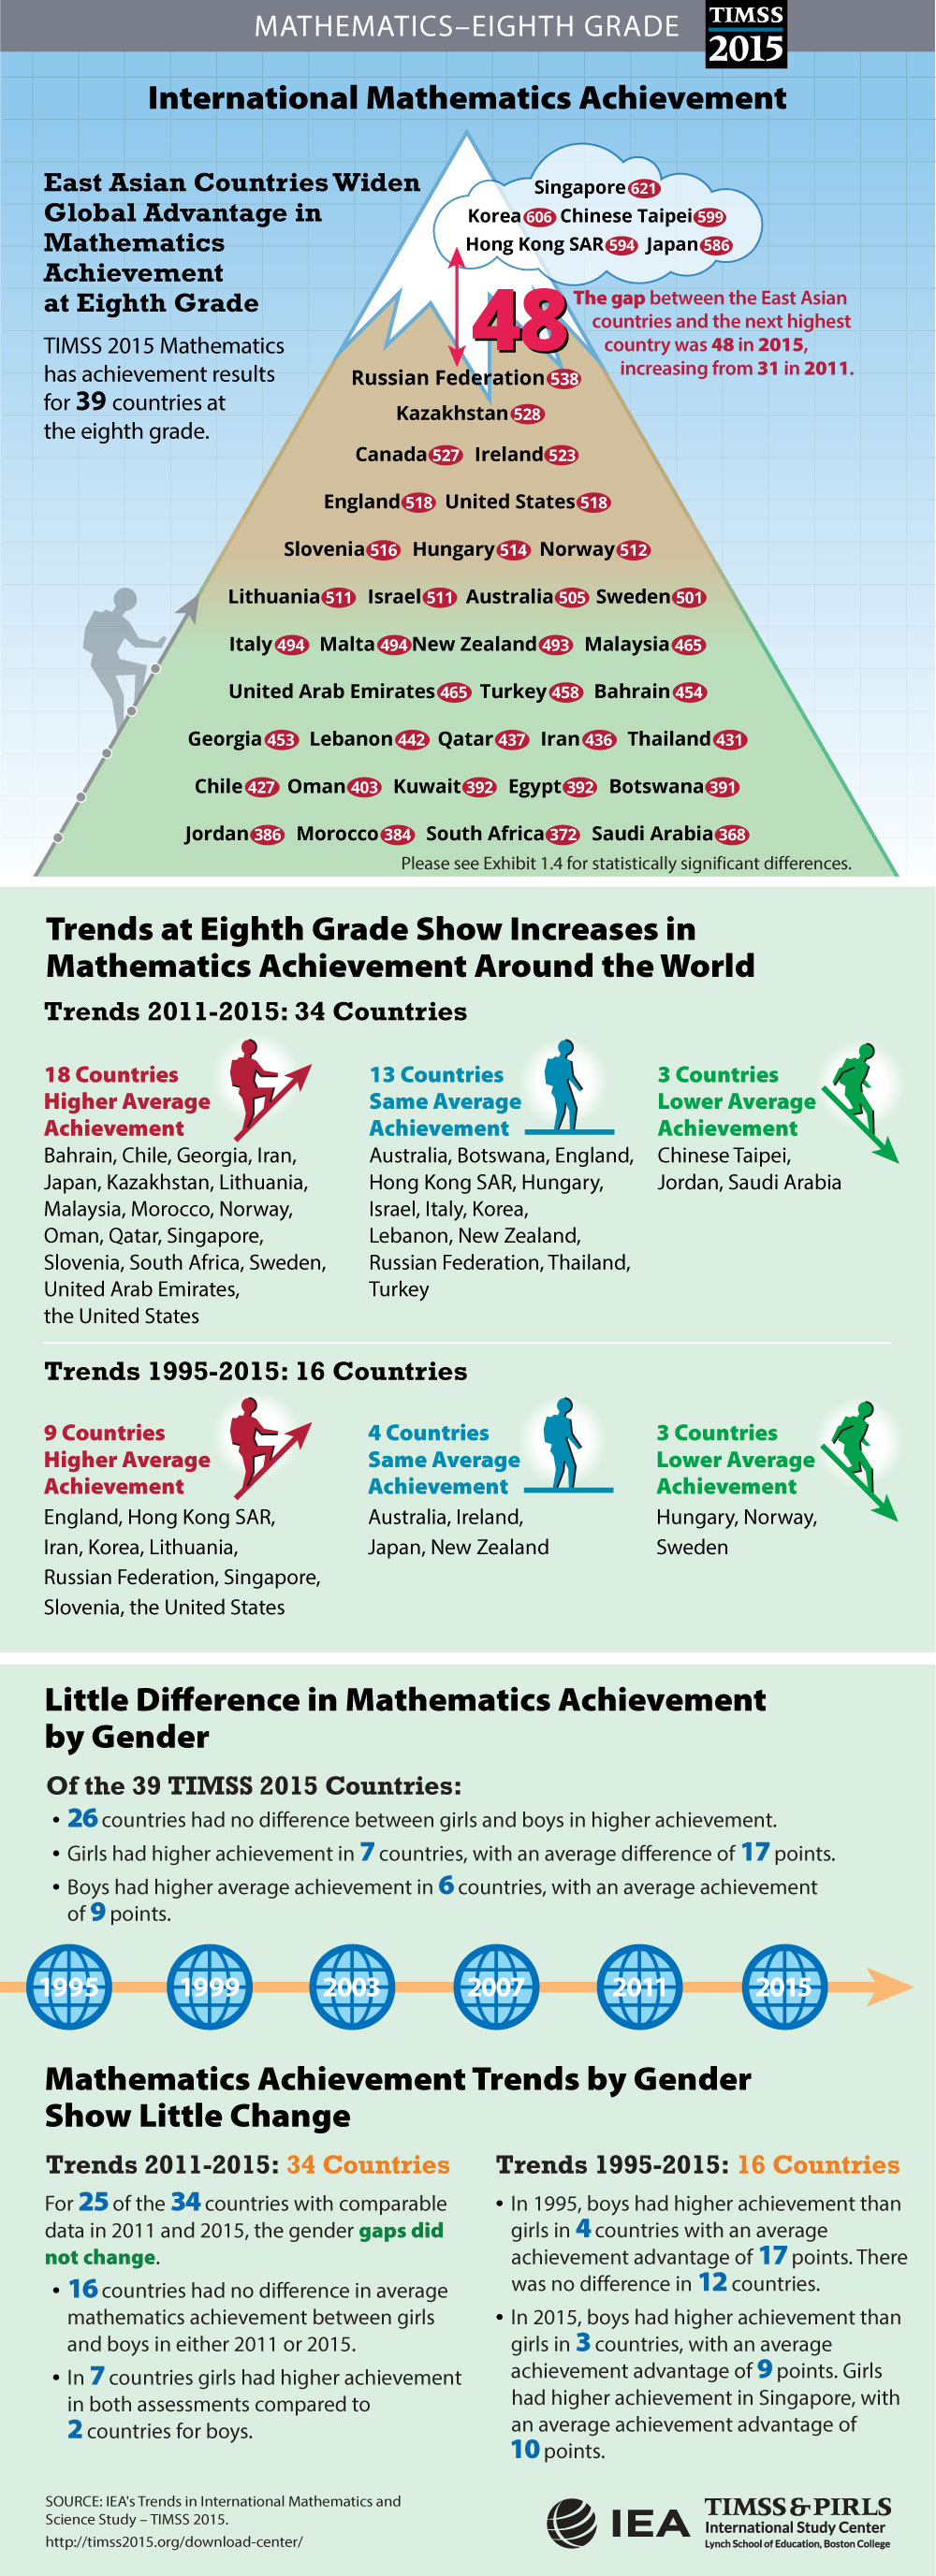 math-student-achievement-infographic-grade-8.jpg